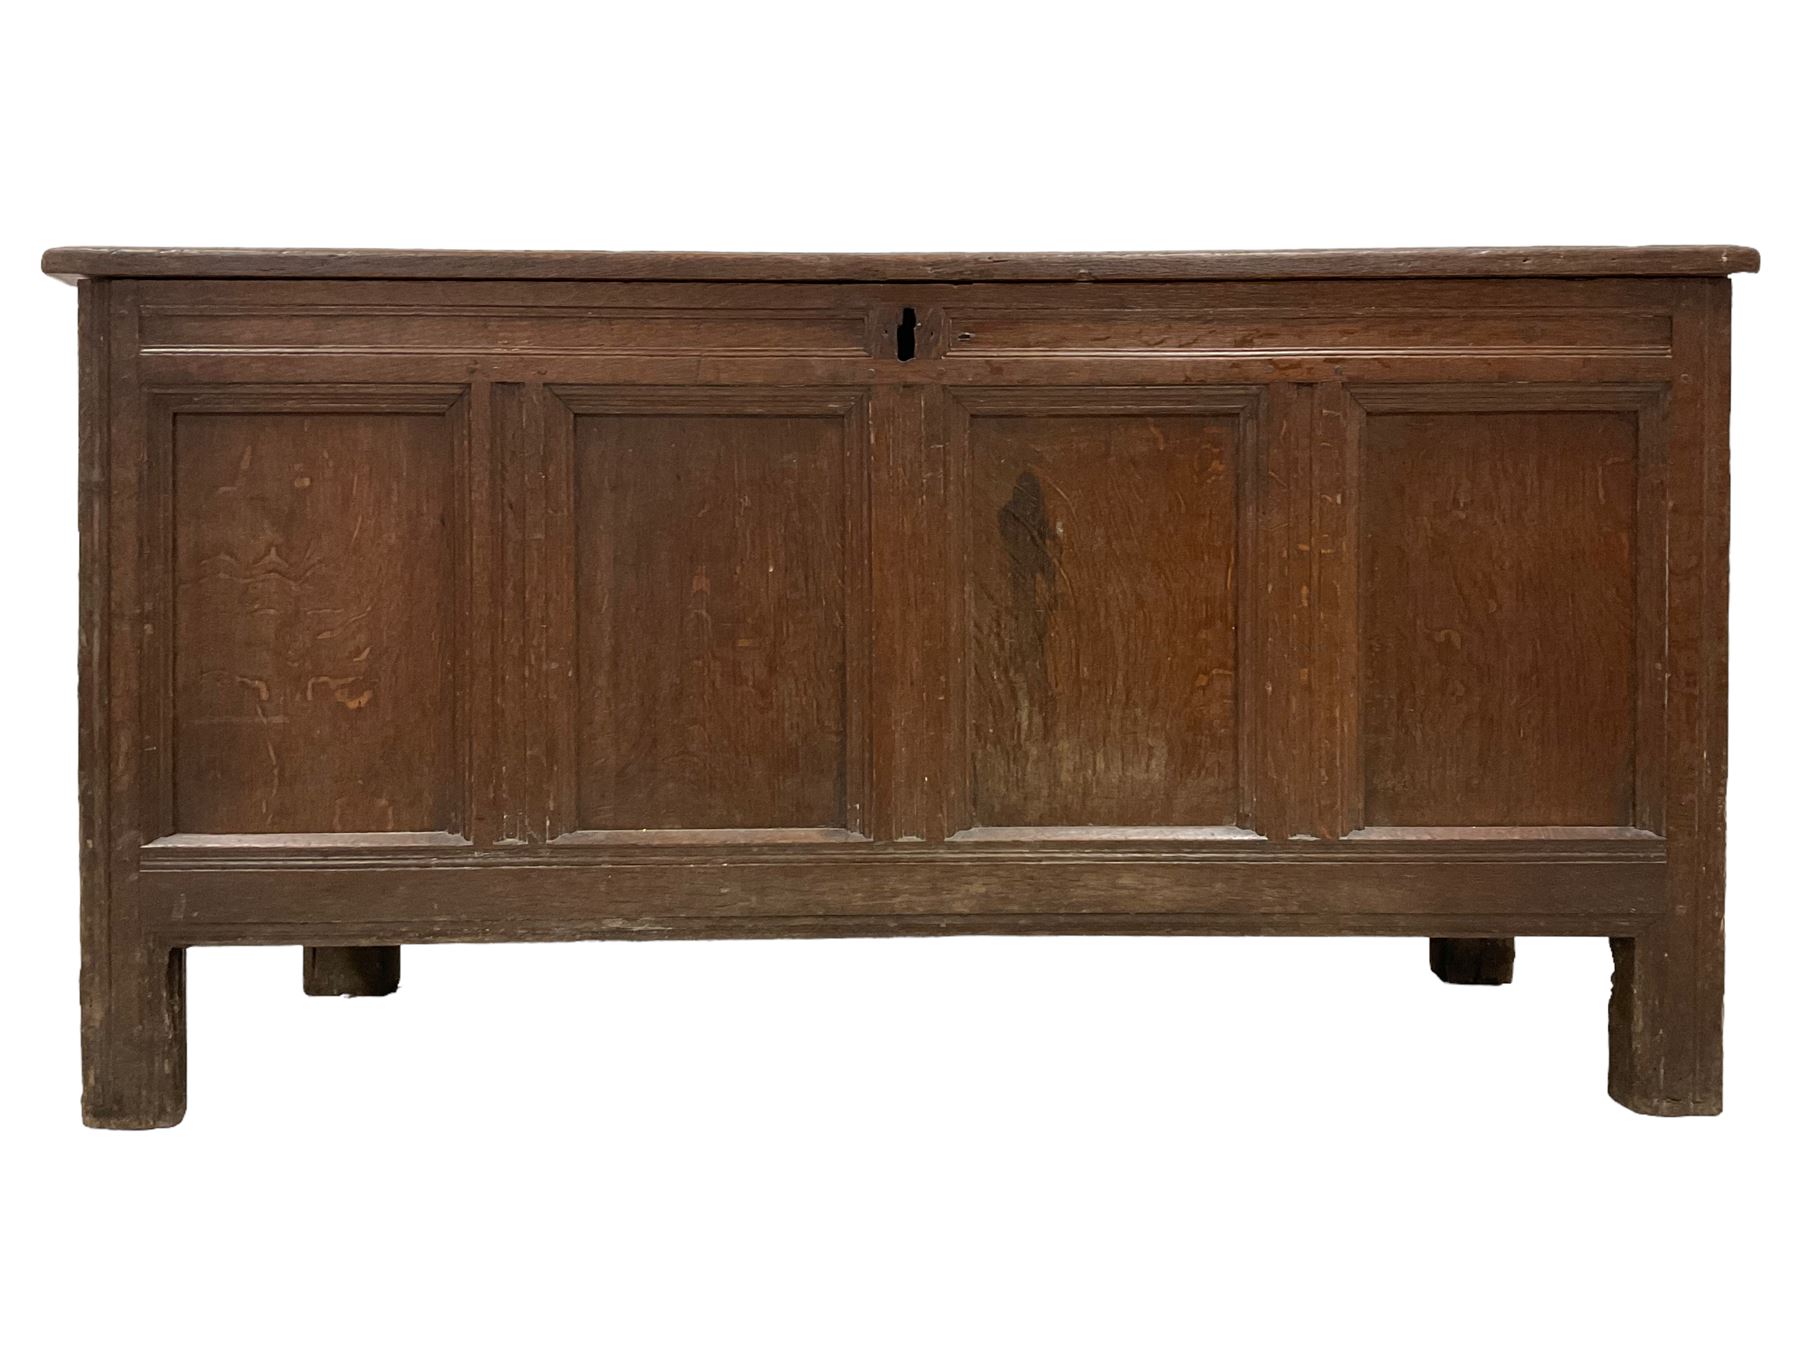 18th century oak coffer or chest